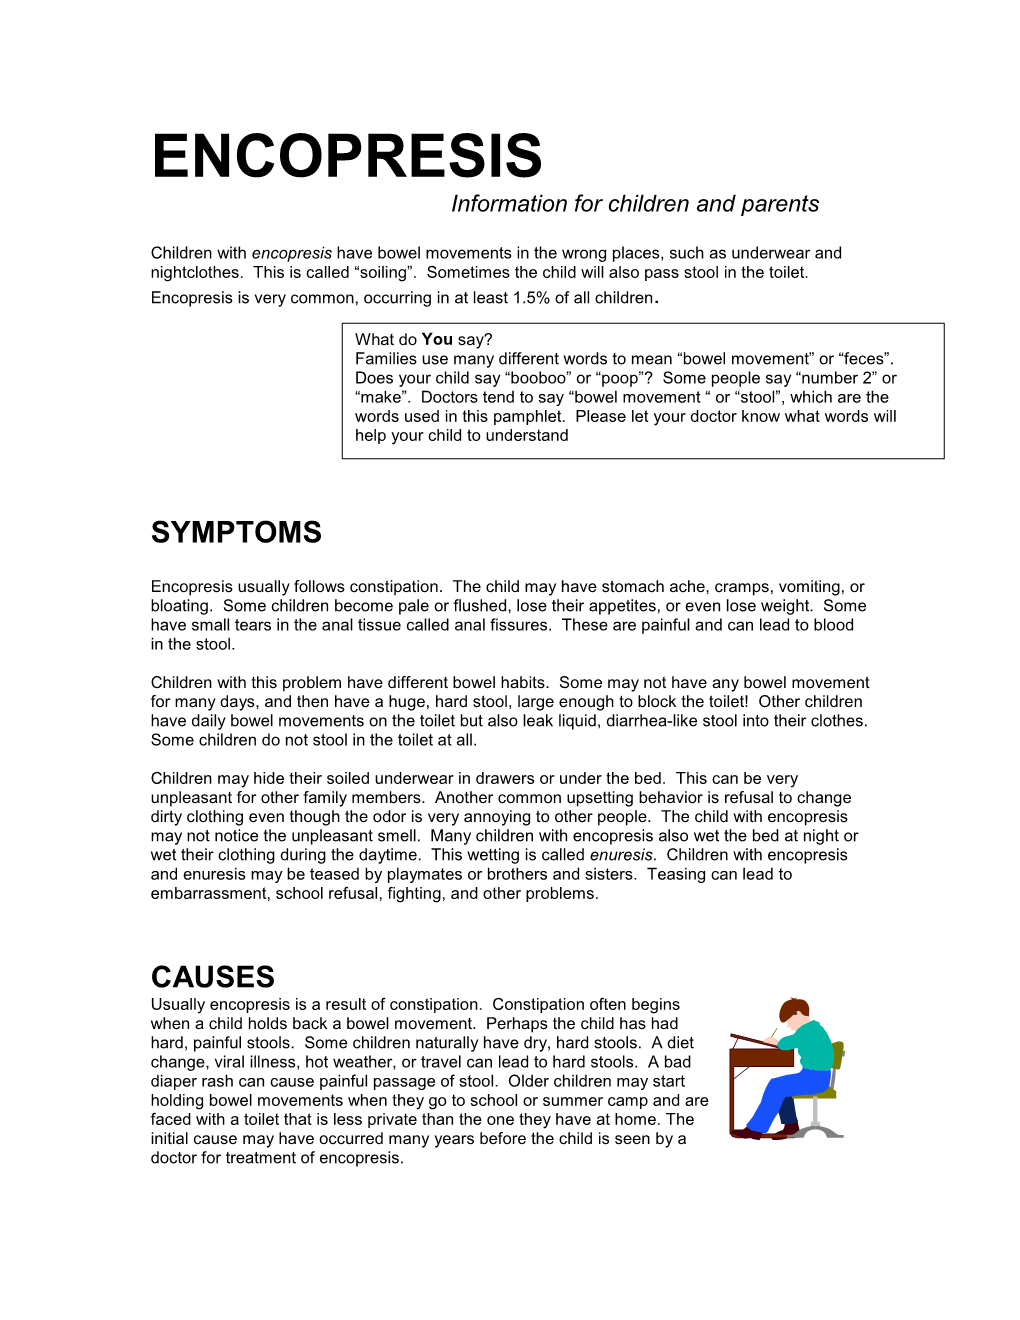 ENCOPRESIS Information for Children and Parents